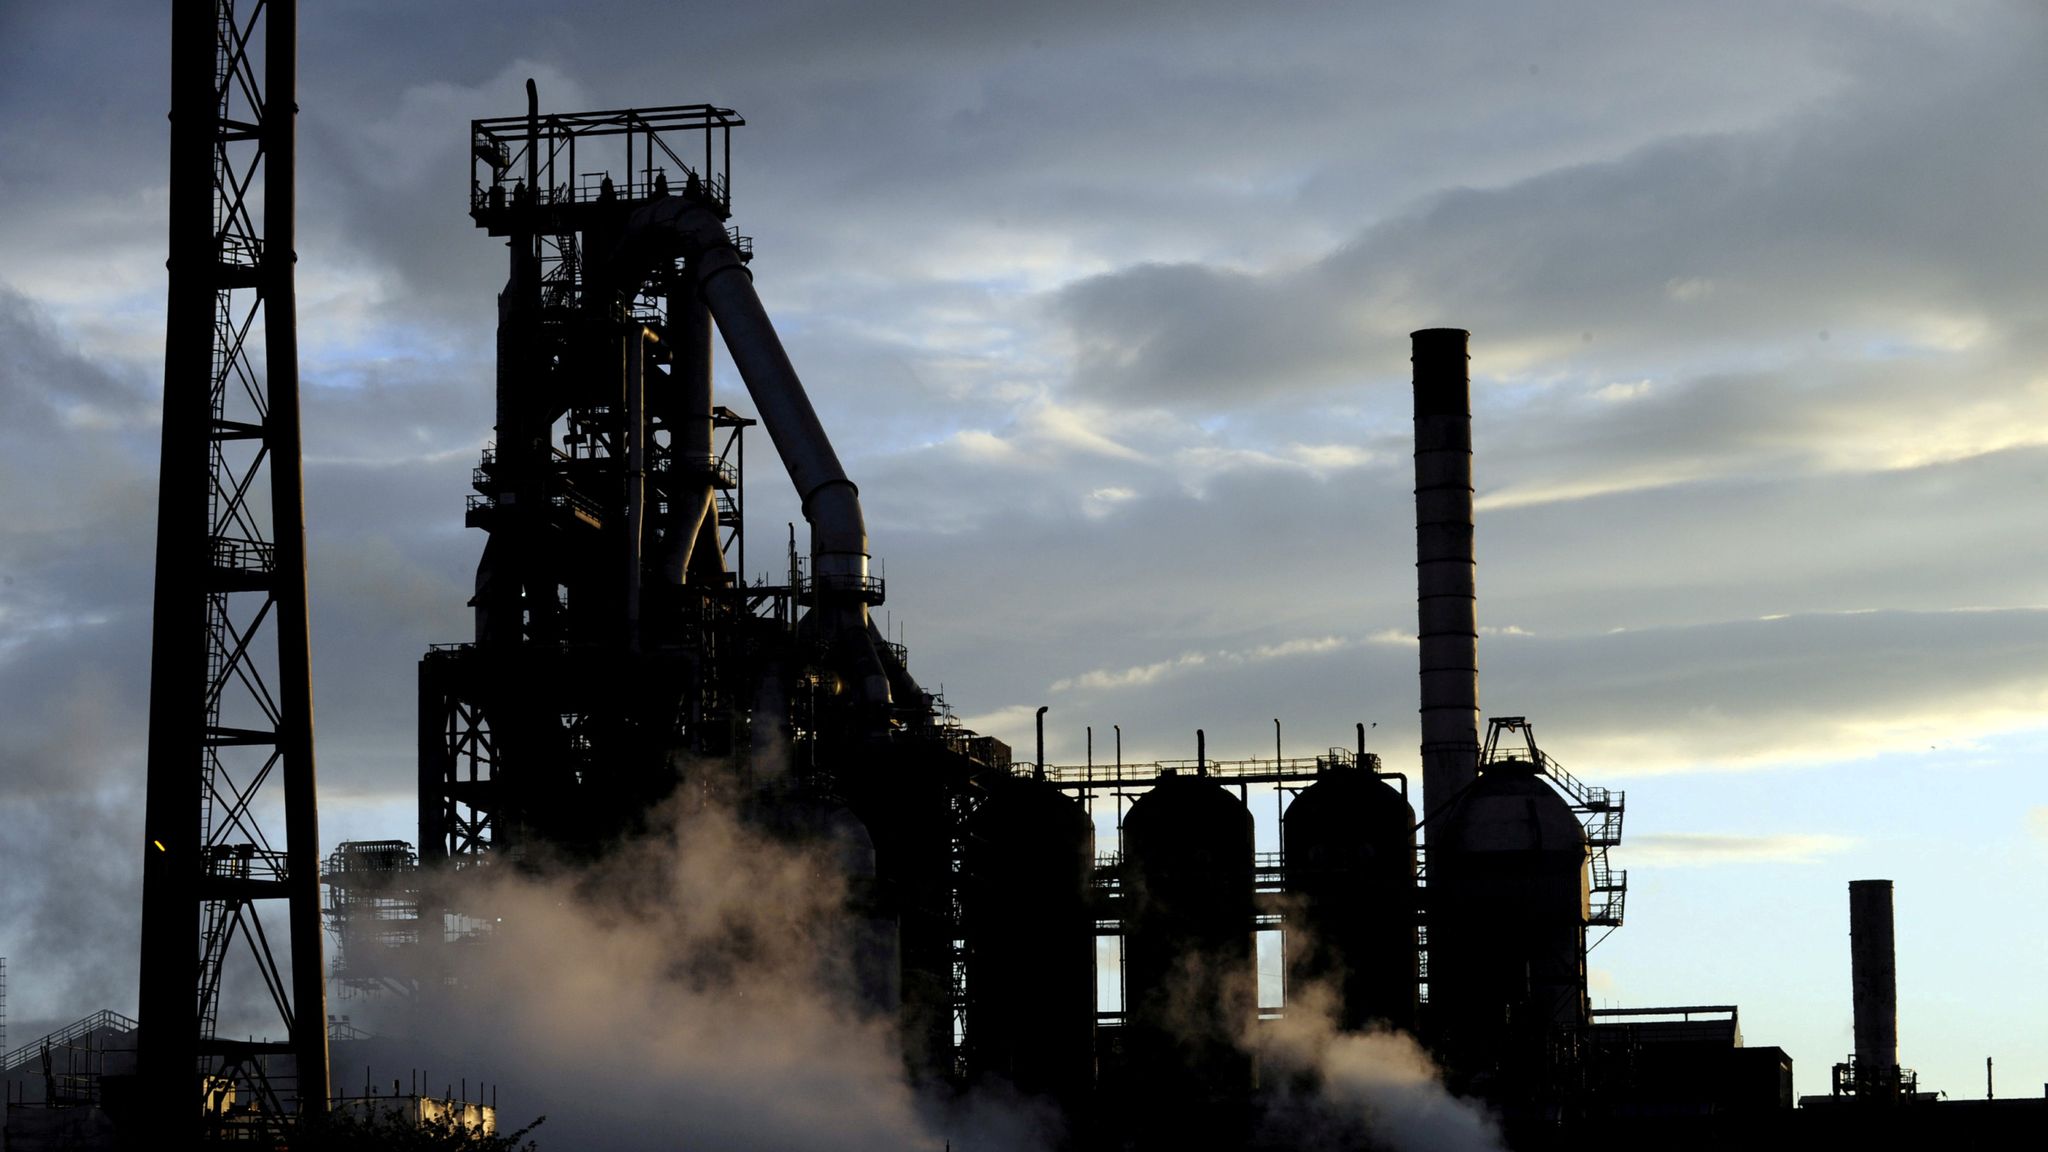 Tata Steel Europe plans more than 3,000 job cuts